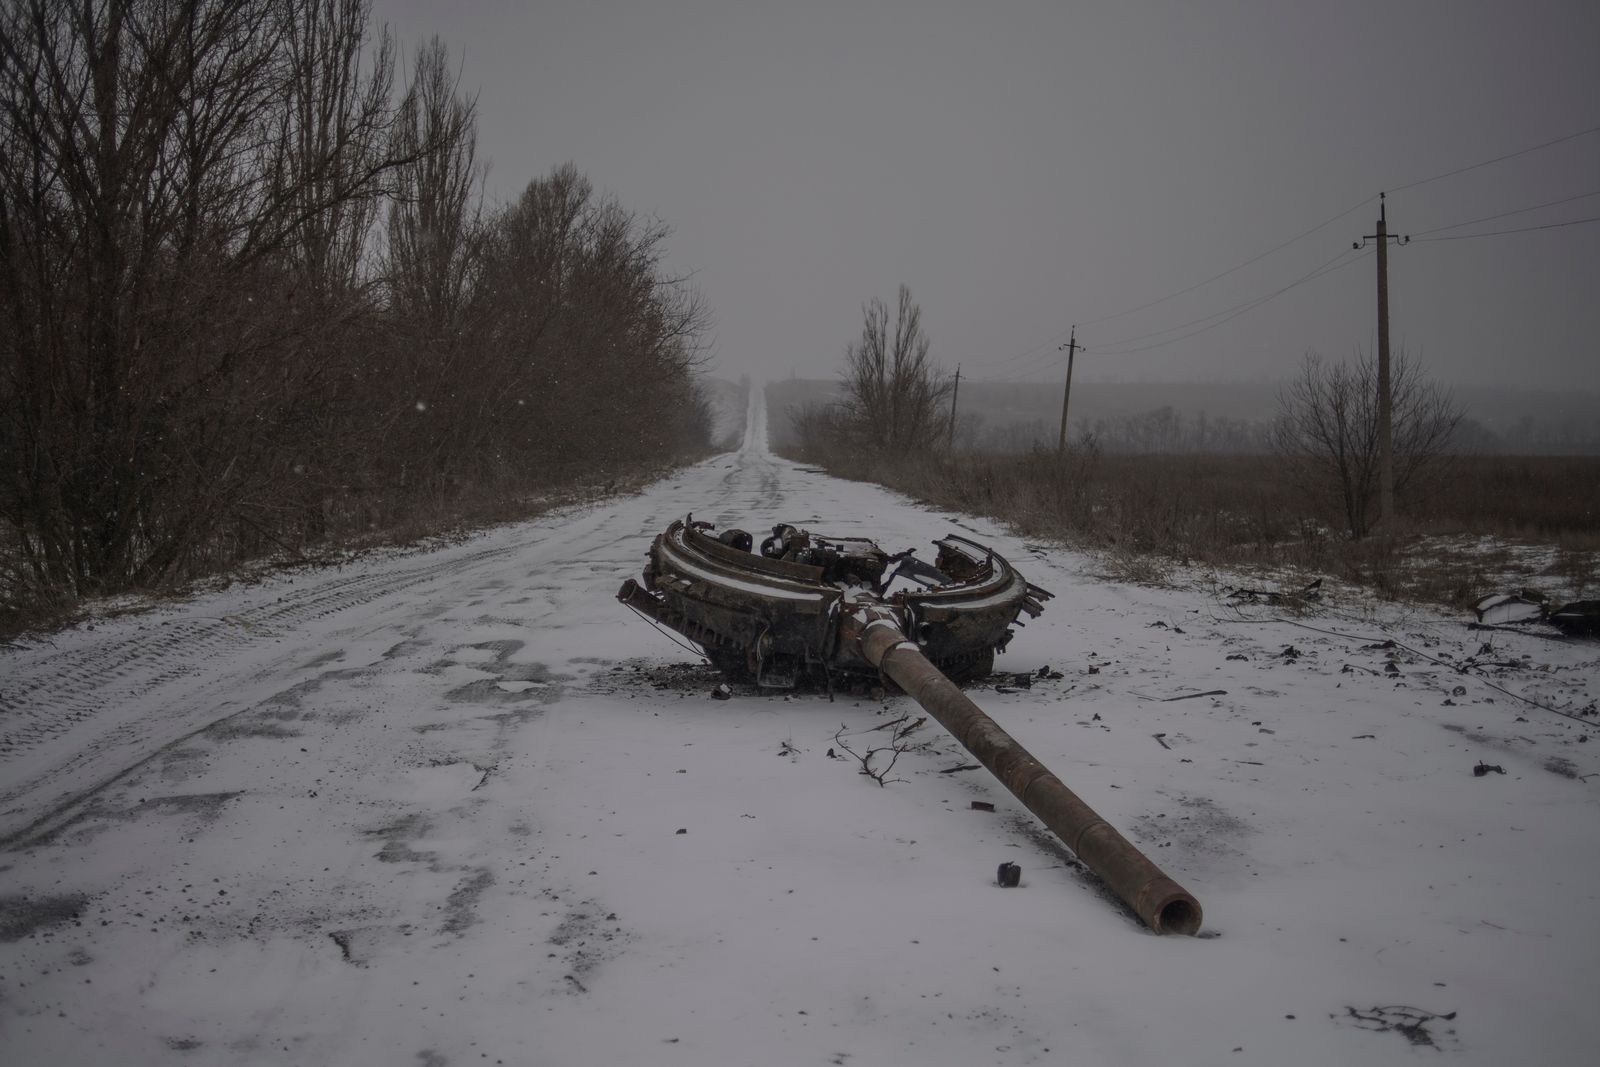 © Valery Melnikov - Destroyed tank. Aftermath of an attack on the village of Kominternovo, Donetsk region, Ukraine